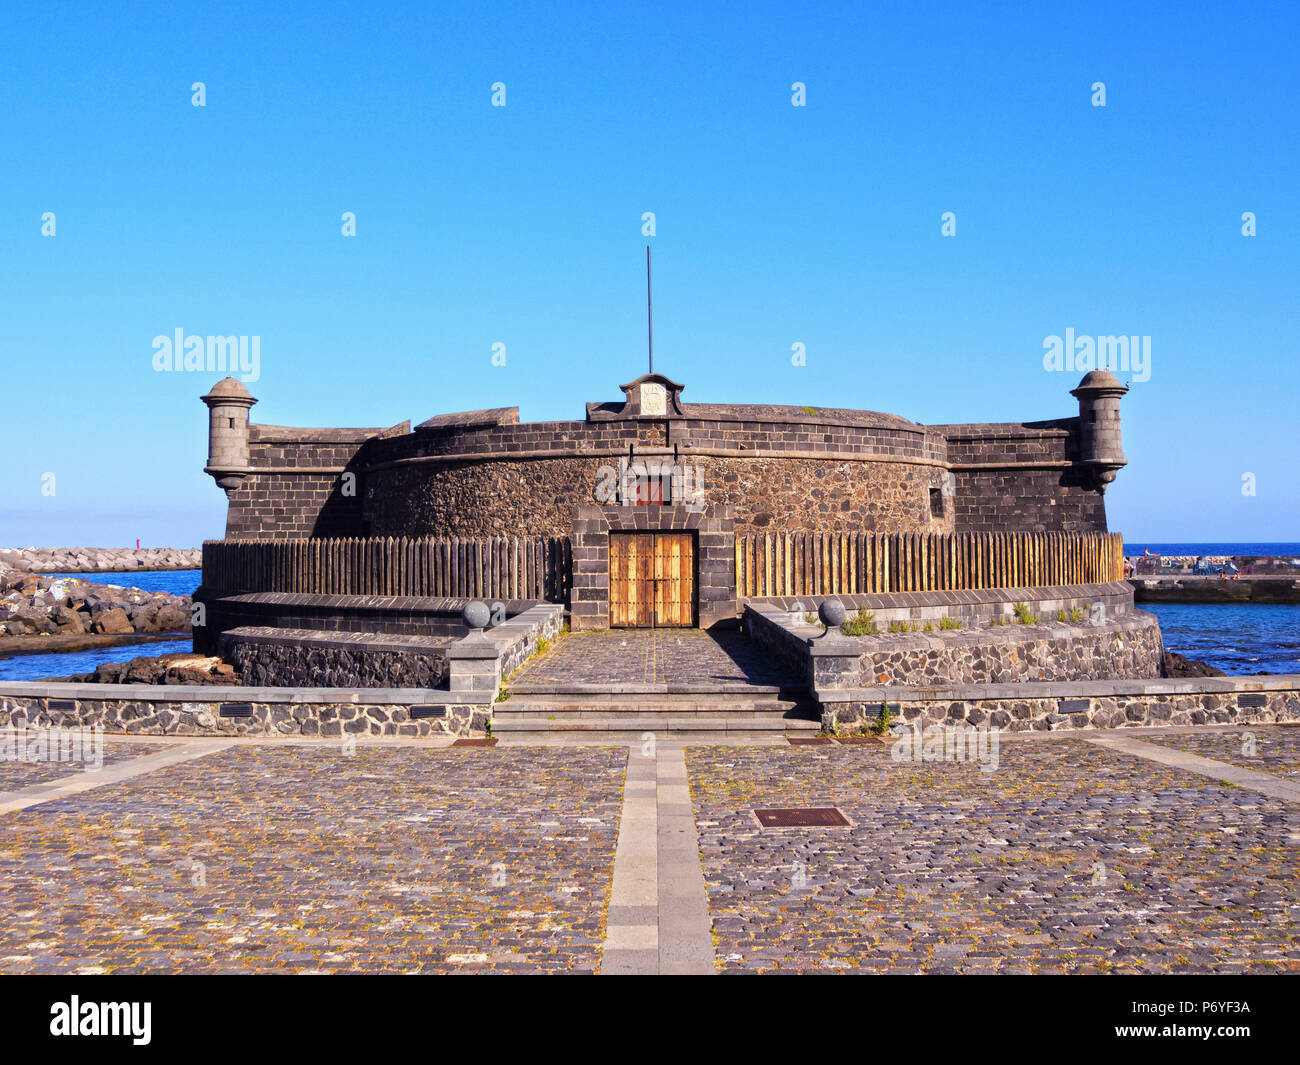 Spain, Canary Islands, Tenerife, Santa Cruz de Tenerife, View of the Castle of John Baptist. Stock Photo